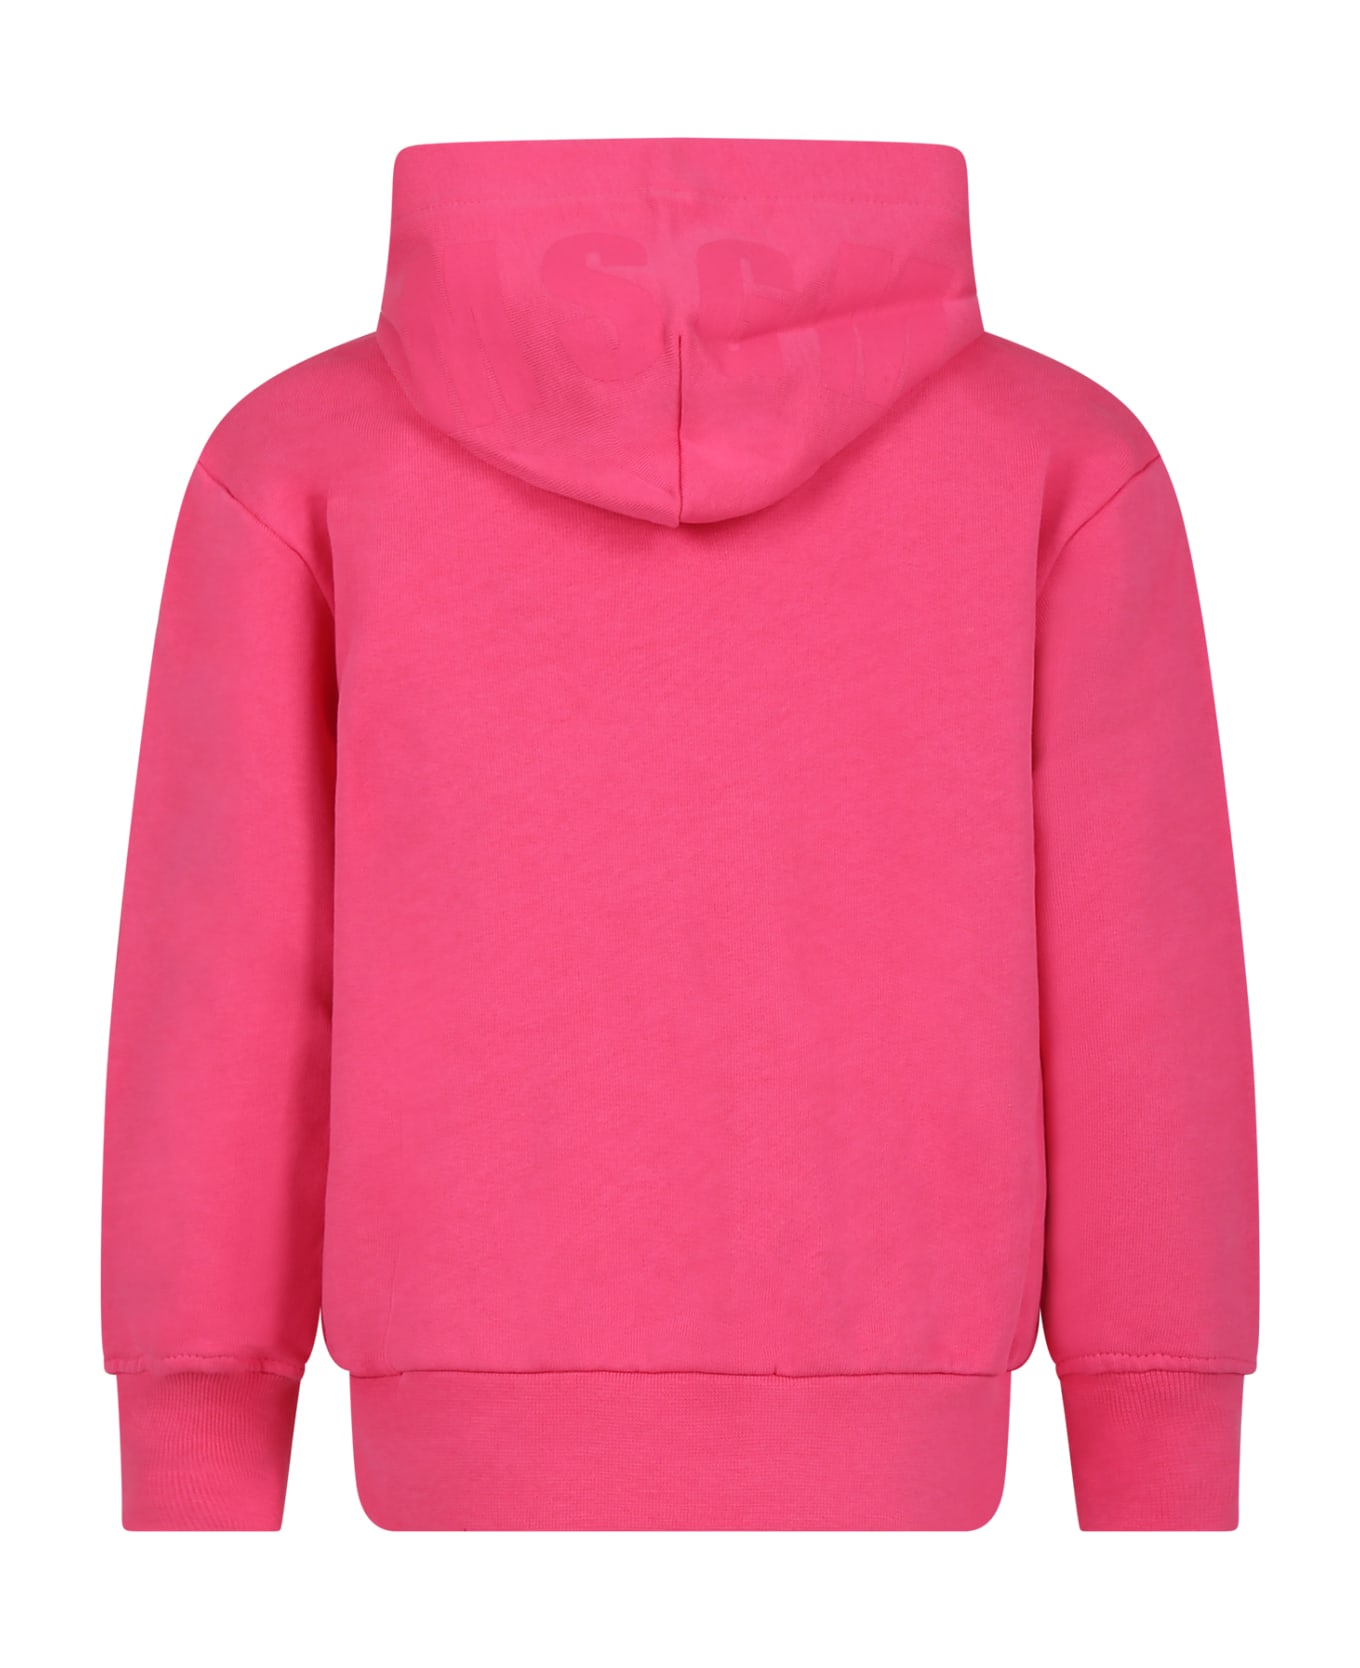 MSGM Fuchsia Sweatshirt For Girl With Logo - Fuchsia ニットウェア＆スウェットシャツ